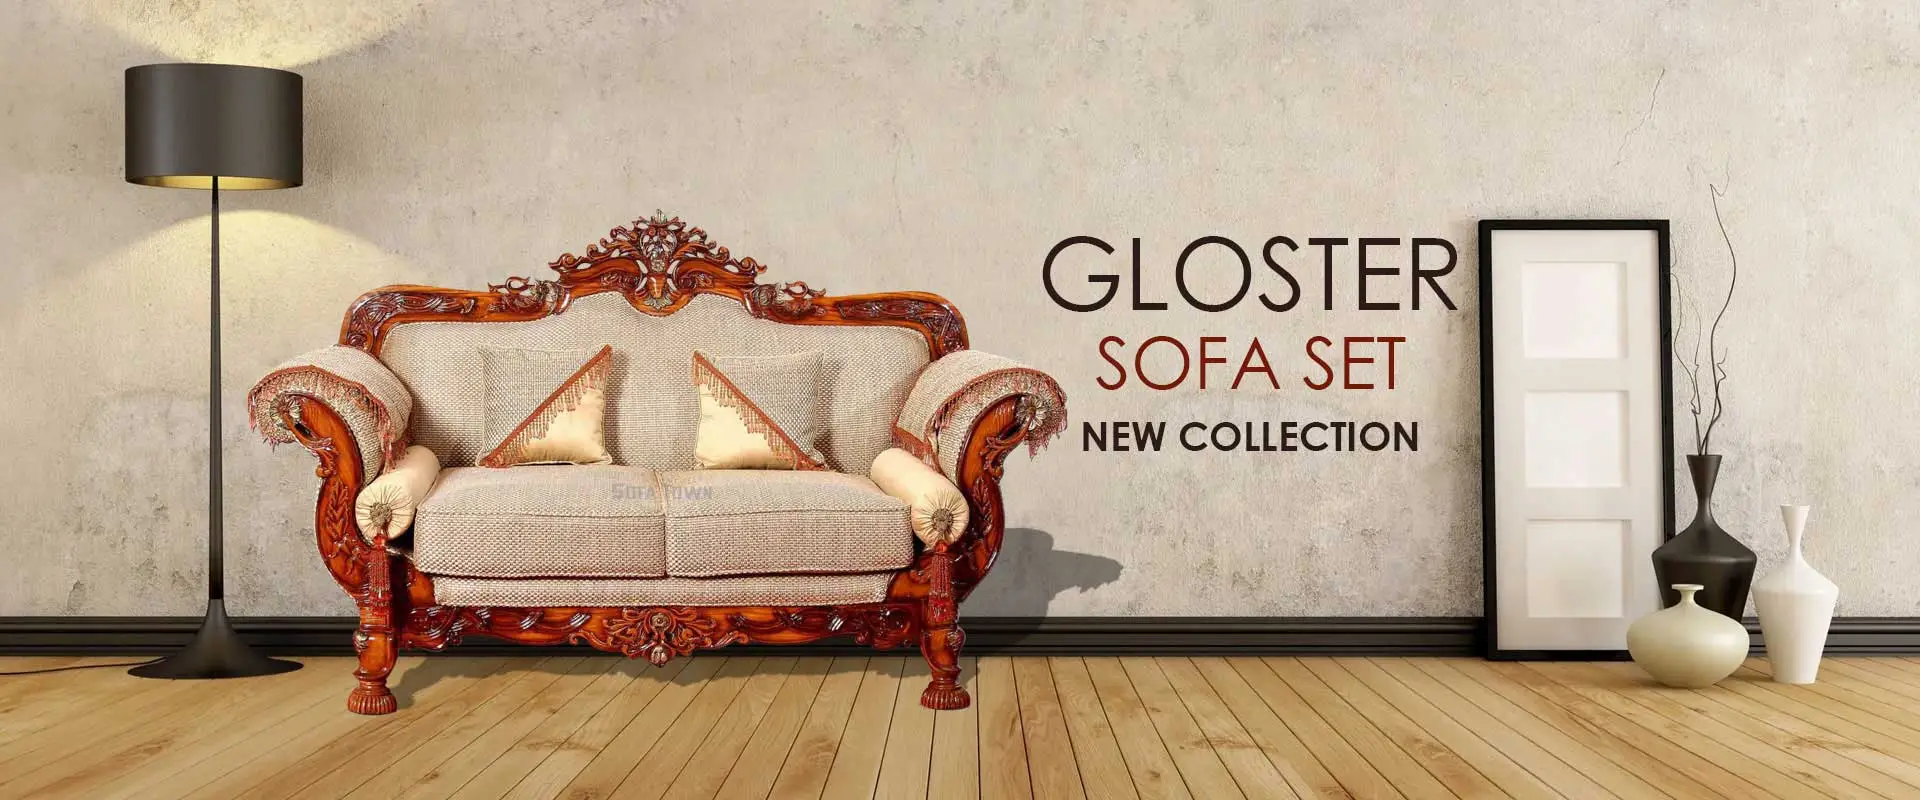 Gloster Sofa Set  Manufacturers in Varanasi